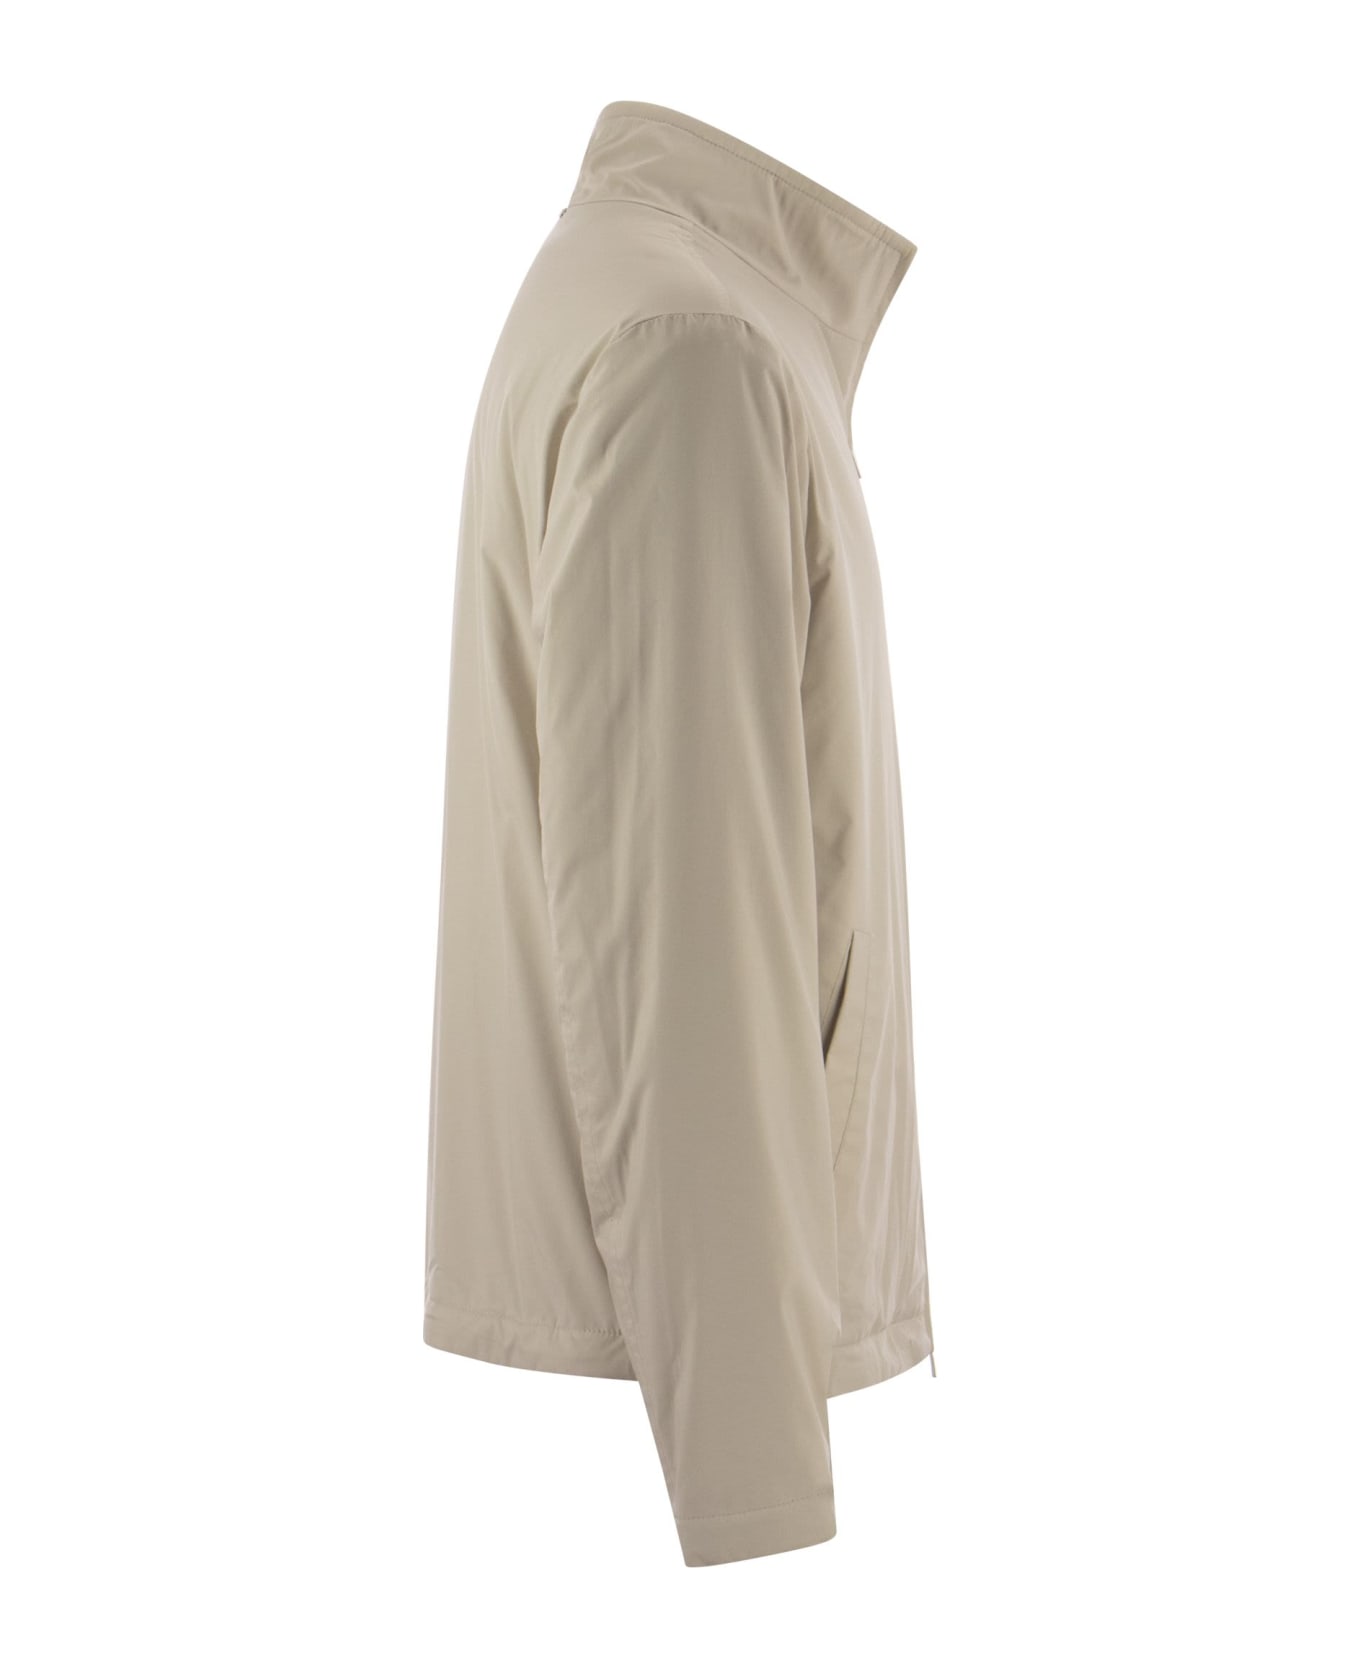 Fedeli Cashmere Lined Jacket - Cream/grey